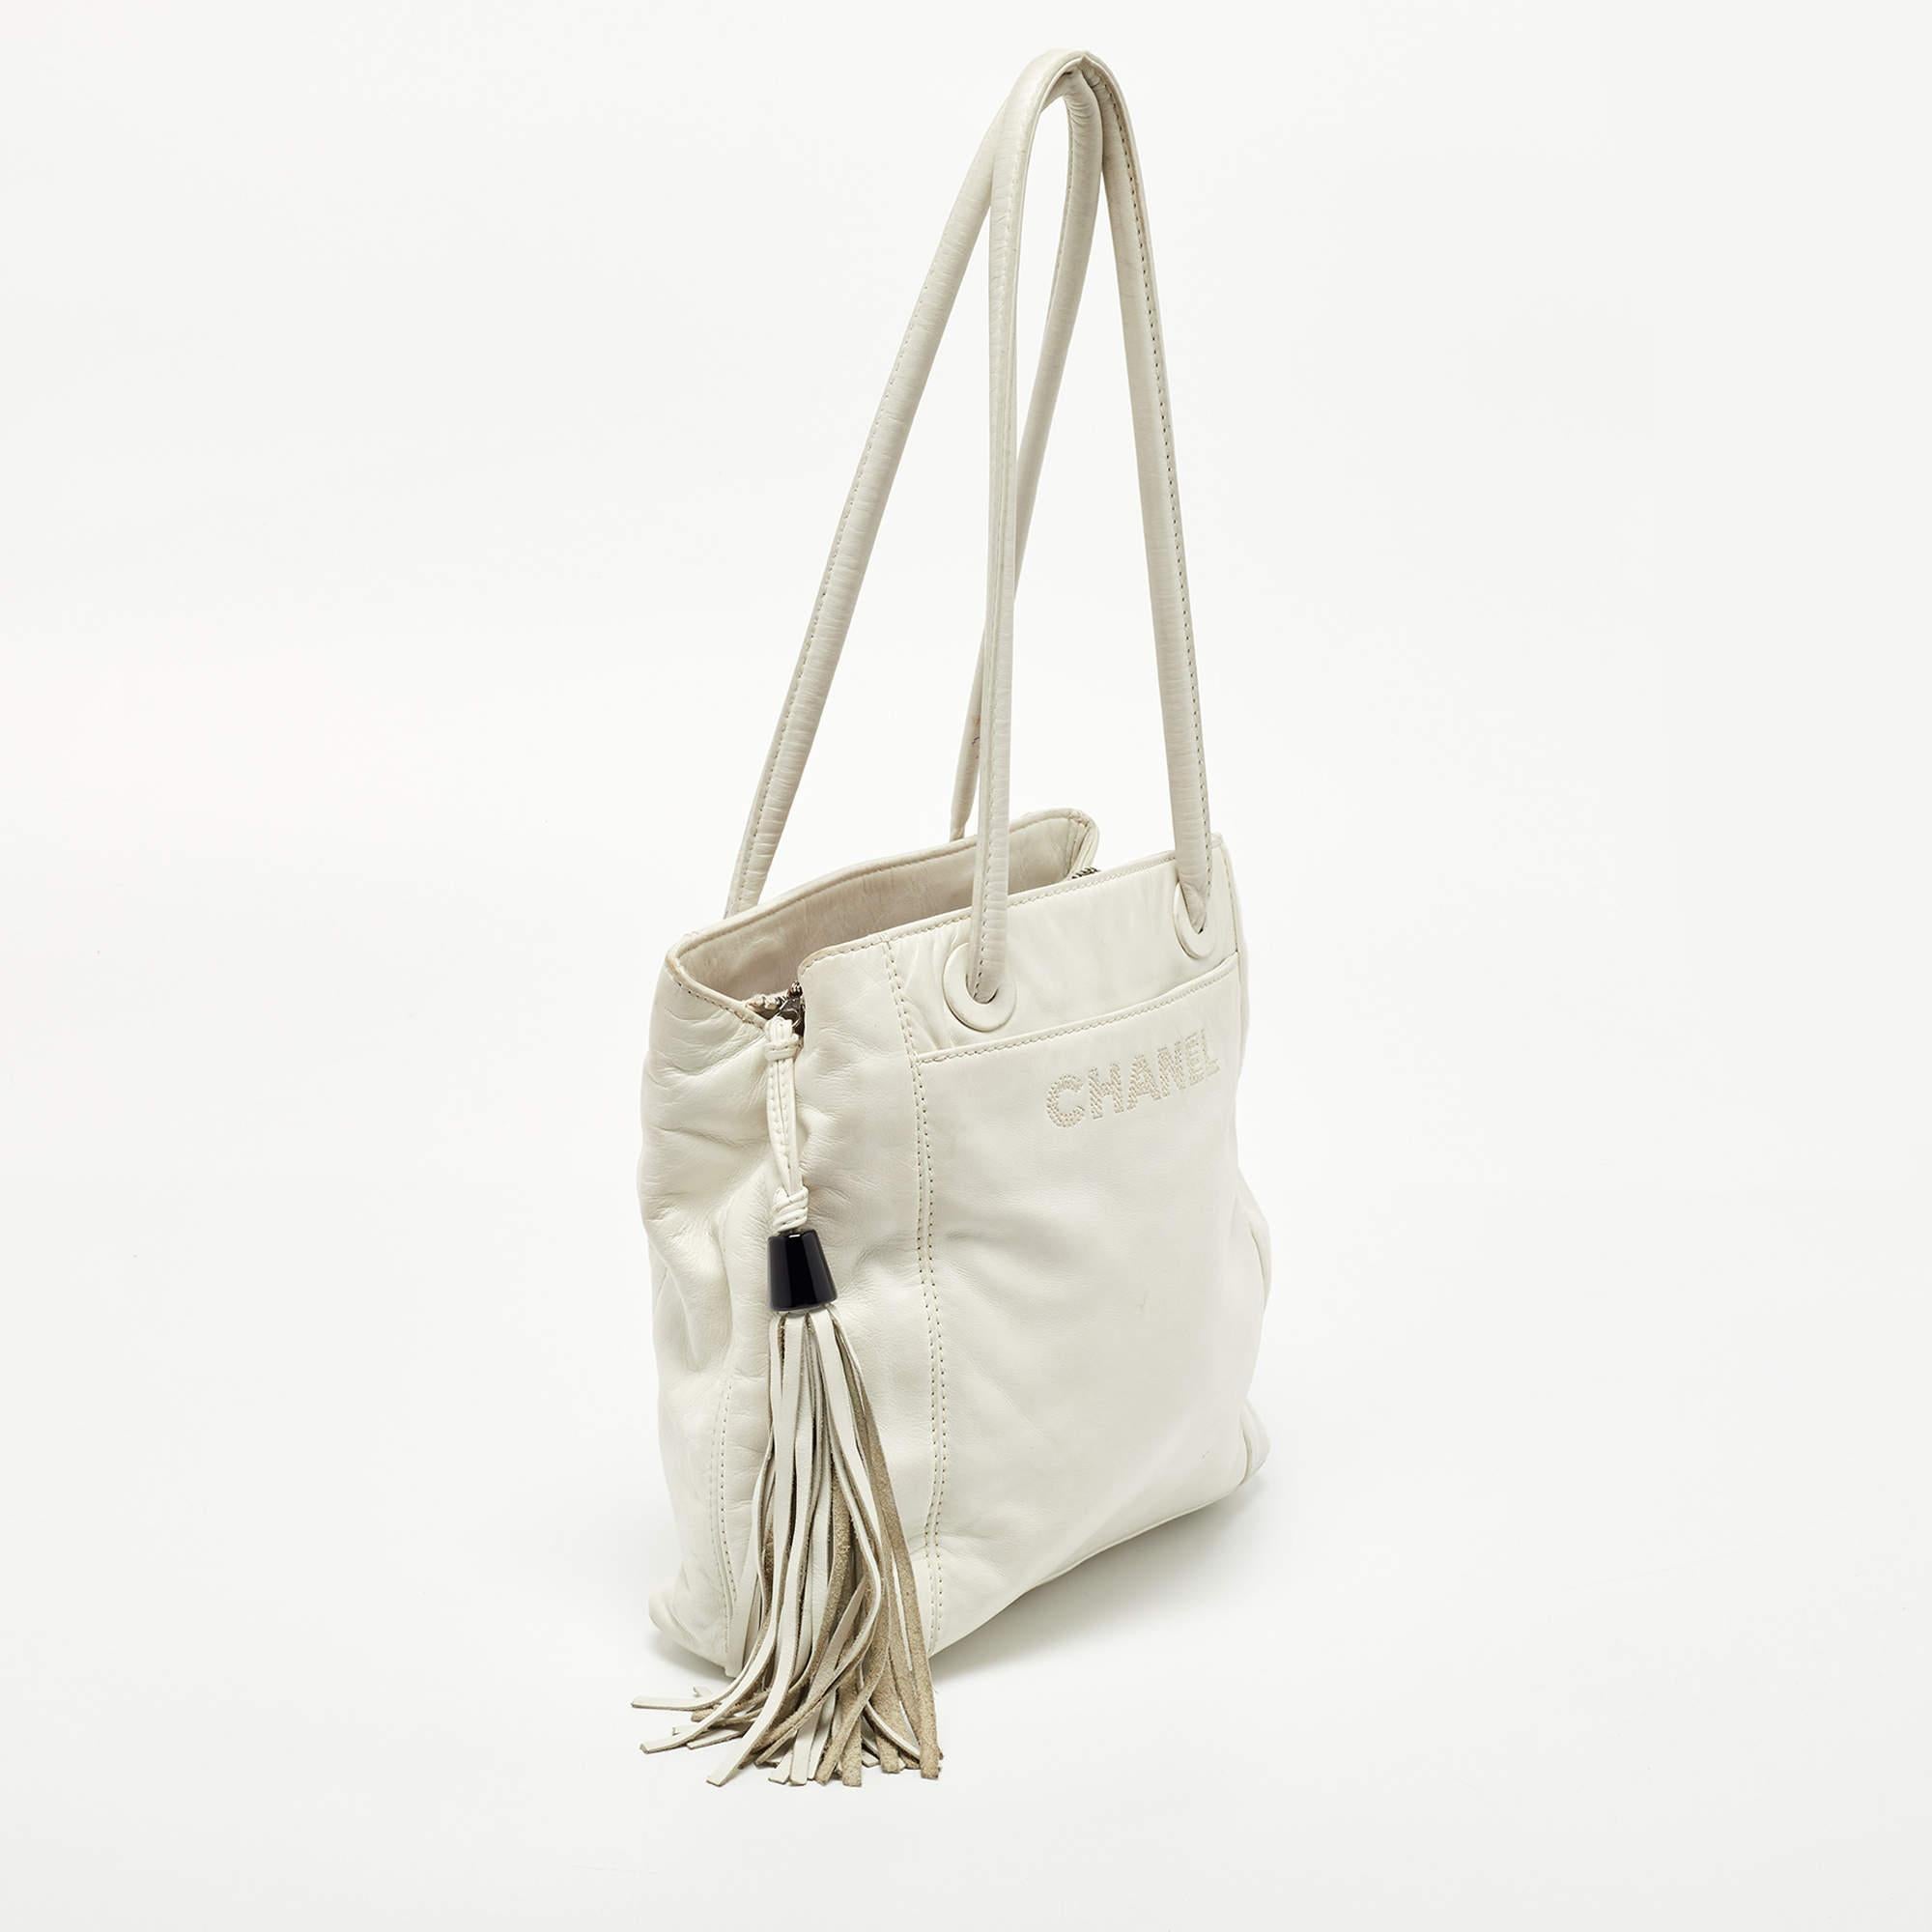 Women's Chanel White Leather Vintage CC Tassel Bag